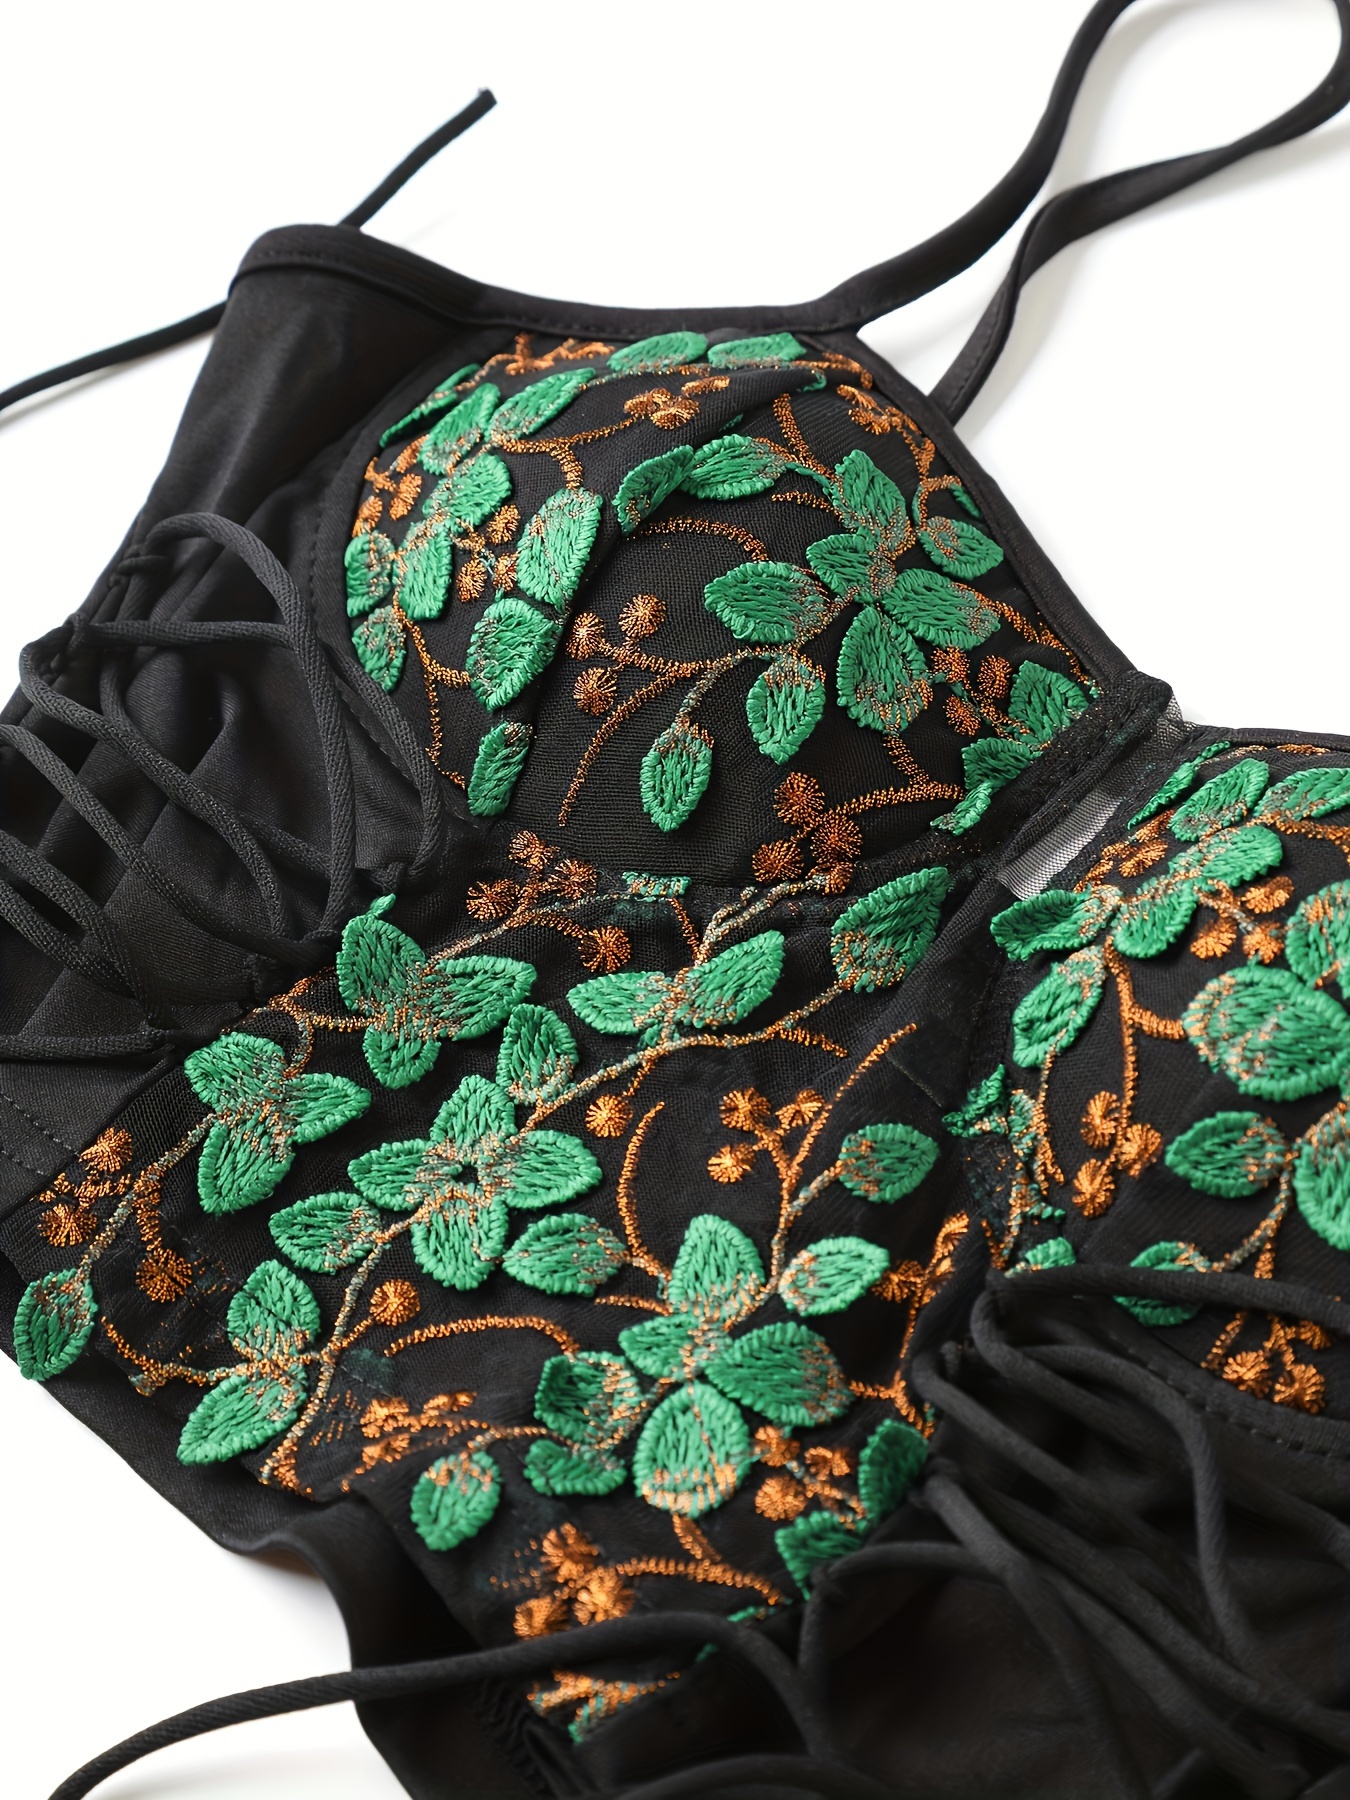 Tank Top for Women Women's Fashion Floral Embroidery Corset Tops Thin  Straps Transparent Mesh Gathering Corset Black L 